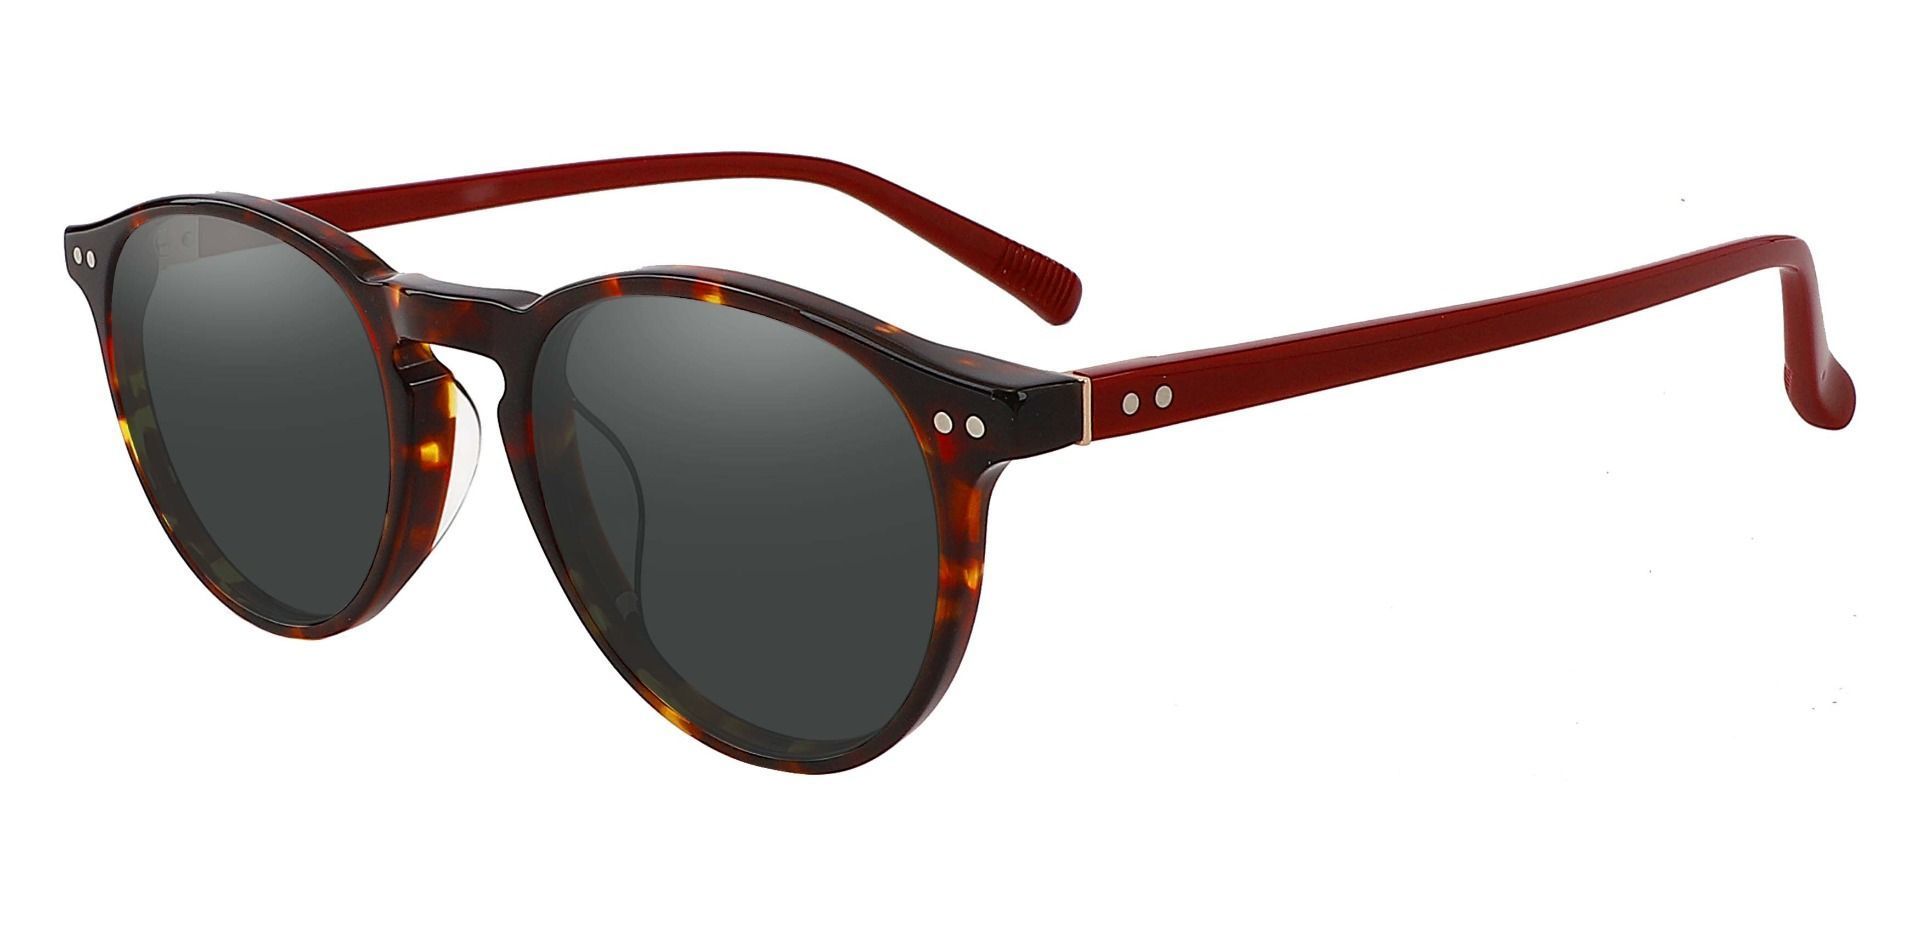 Monarch Oval Prescription Sunglasses - Tortoise Frame With Gray Lenses